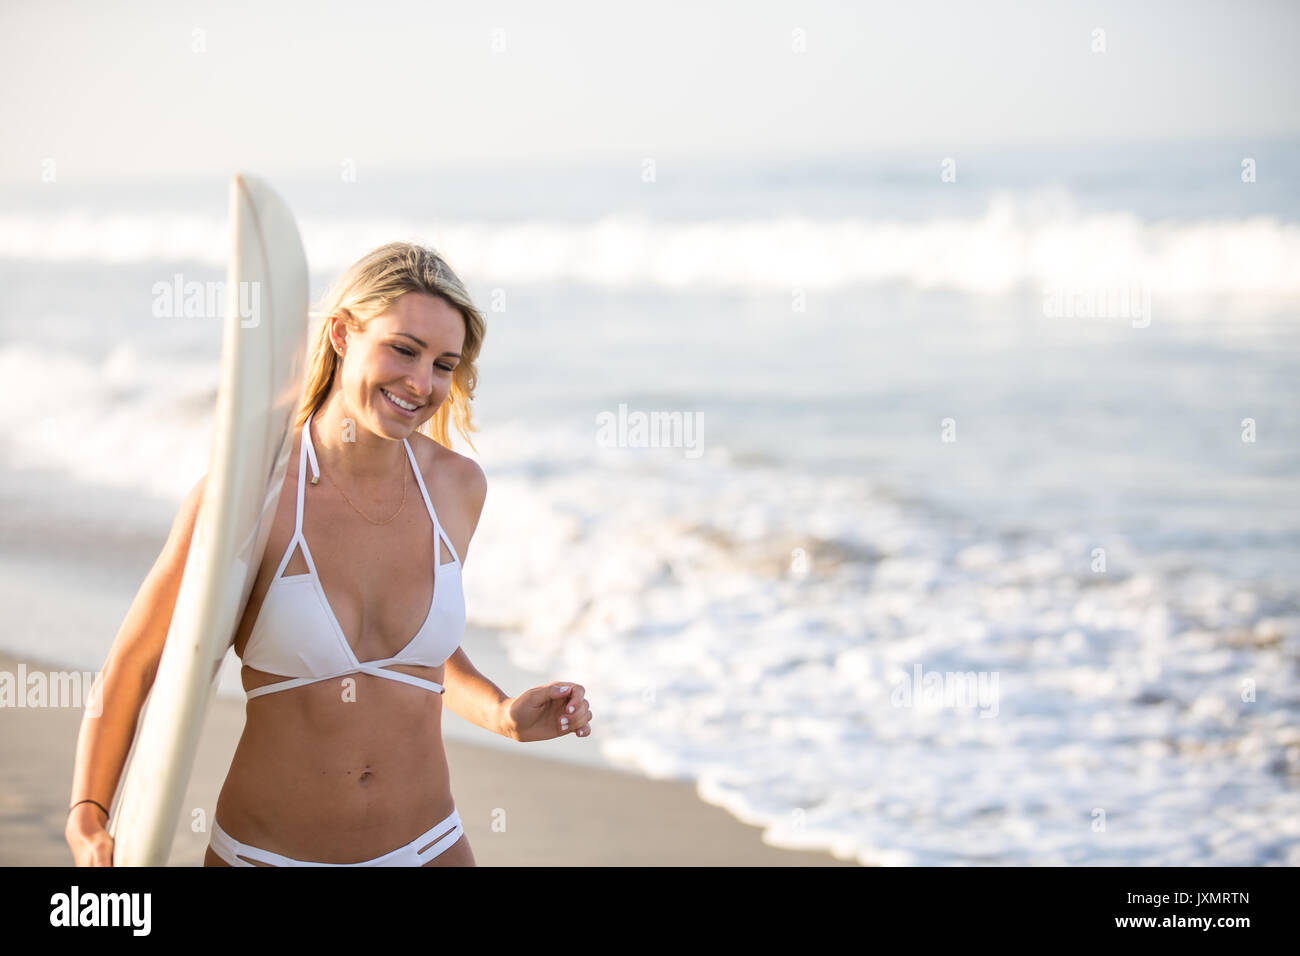 Young female surfer carrying surfboard along beach, Santa Monica, California, USA Stock Photo